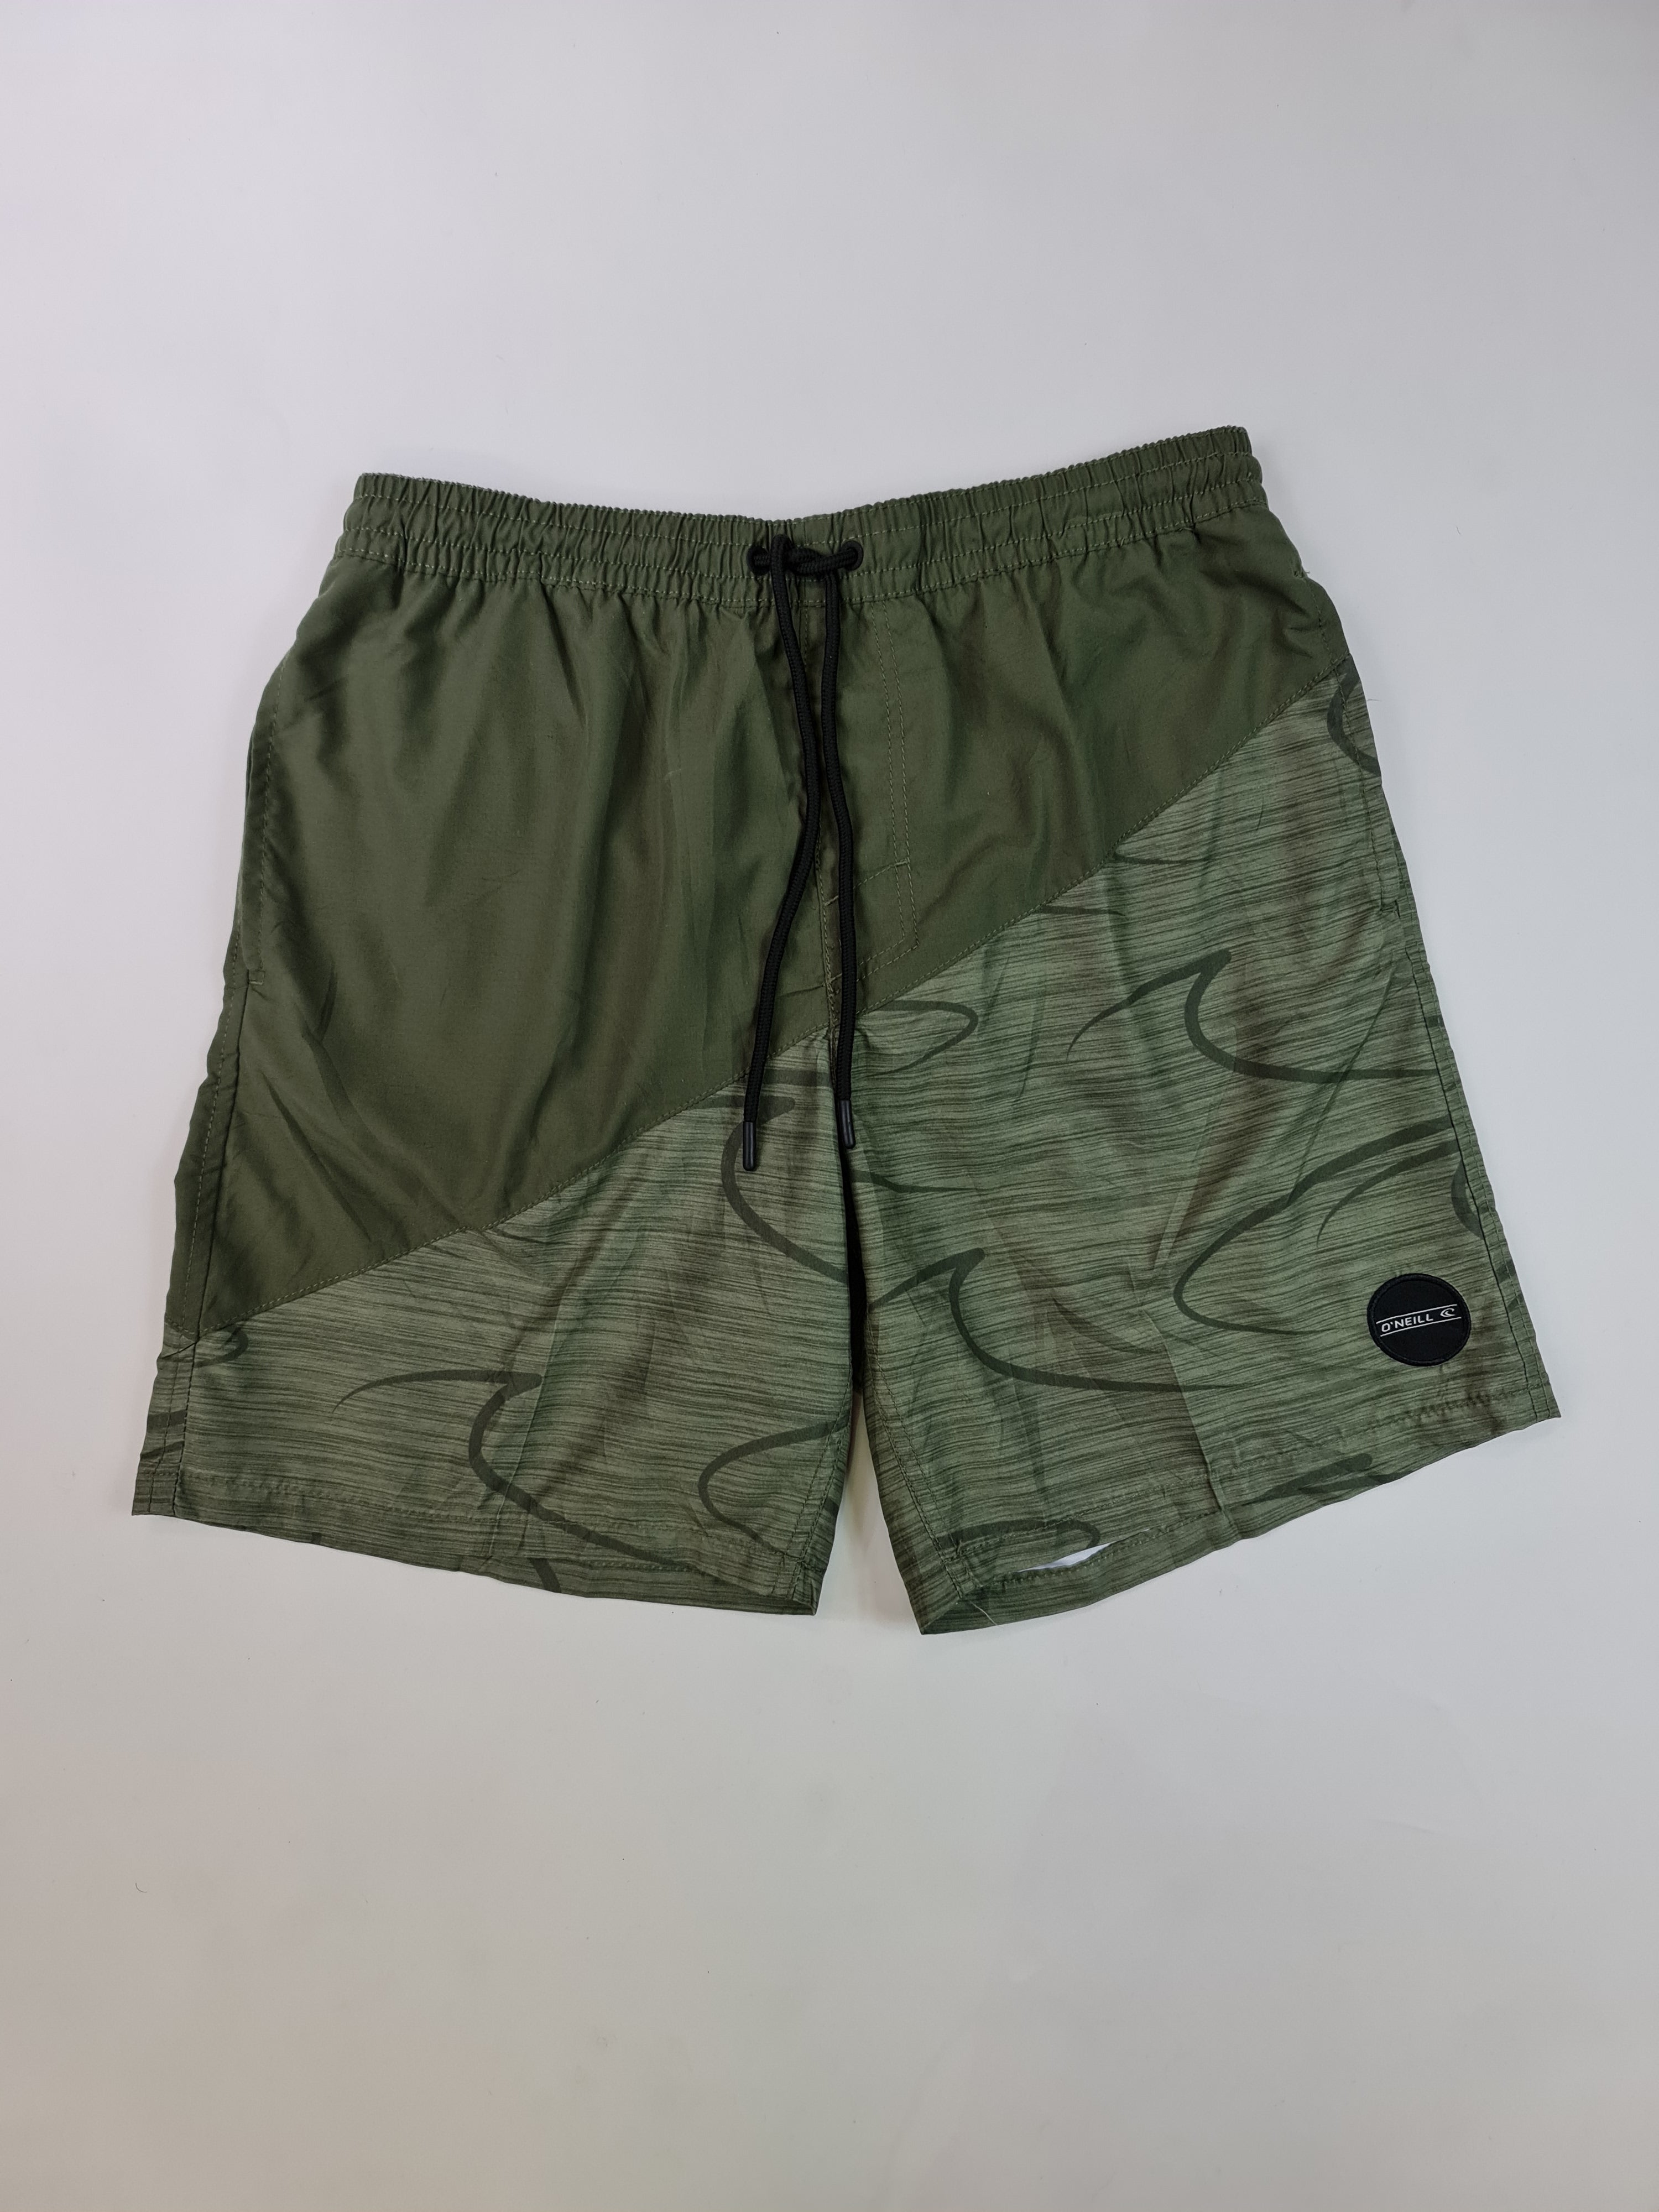 Pantaloneta marca Obeill - (Talla: S/P) Verde